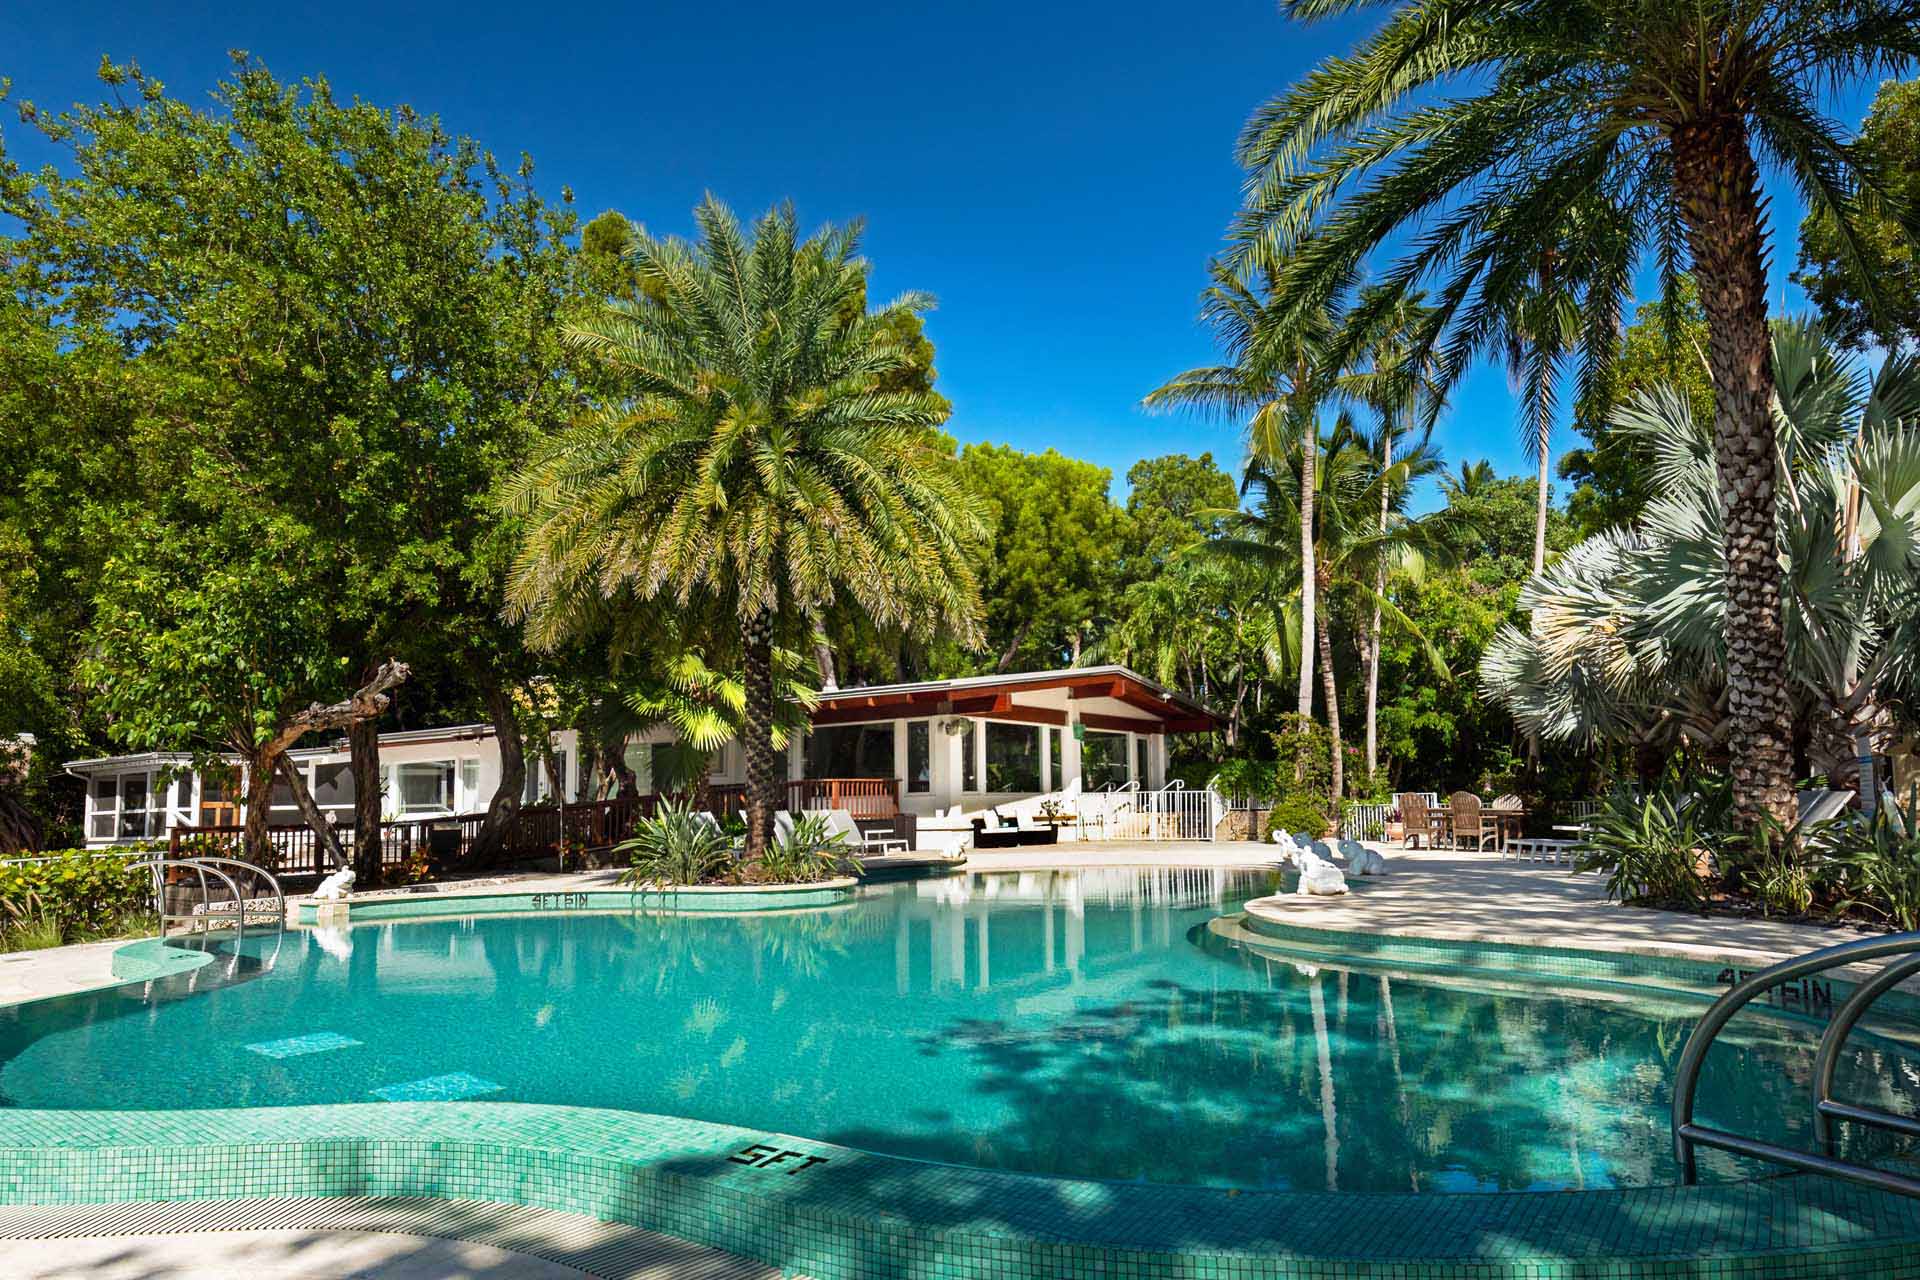 Largo resort infinity pool next to the Grand Lodge